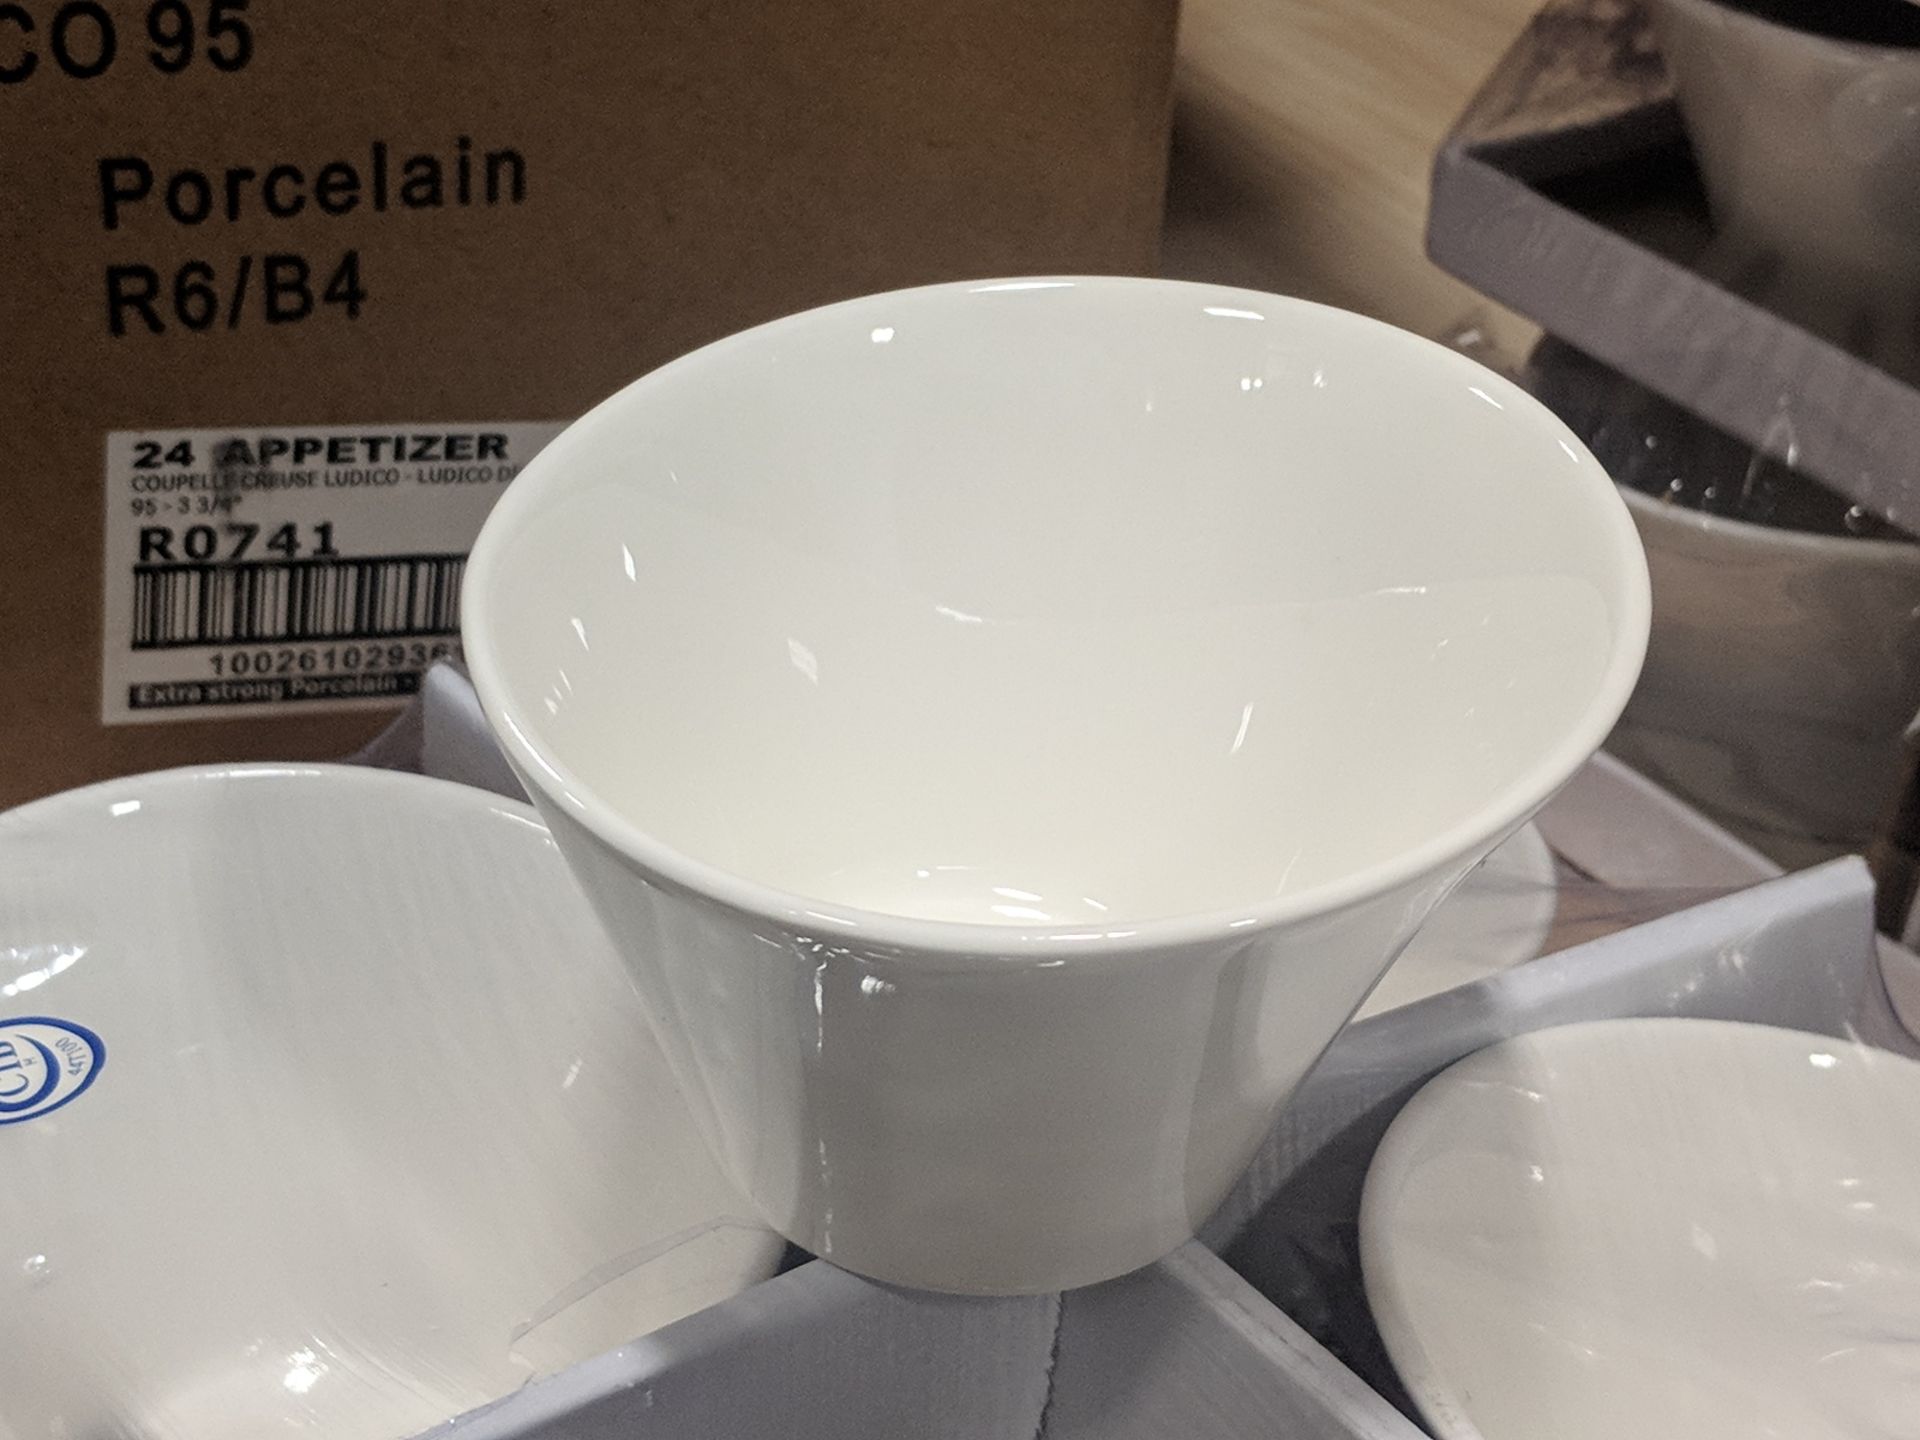 5oz/150ml White Porcleain Appetizer Ludico Bowls, Arcoroc R0741 - Lot of 24 (1 Case) - Image 3 of 6